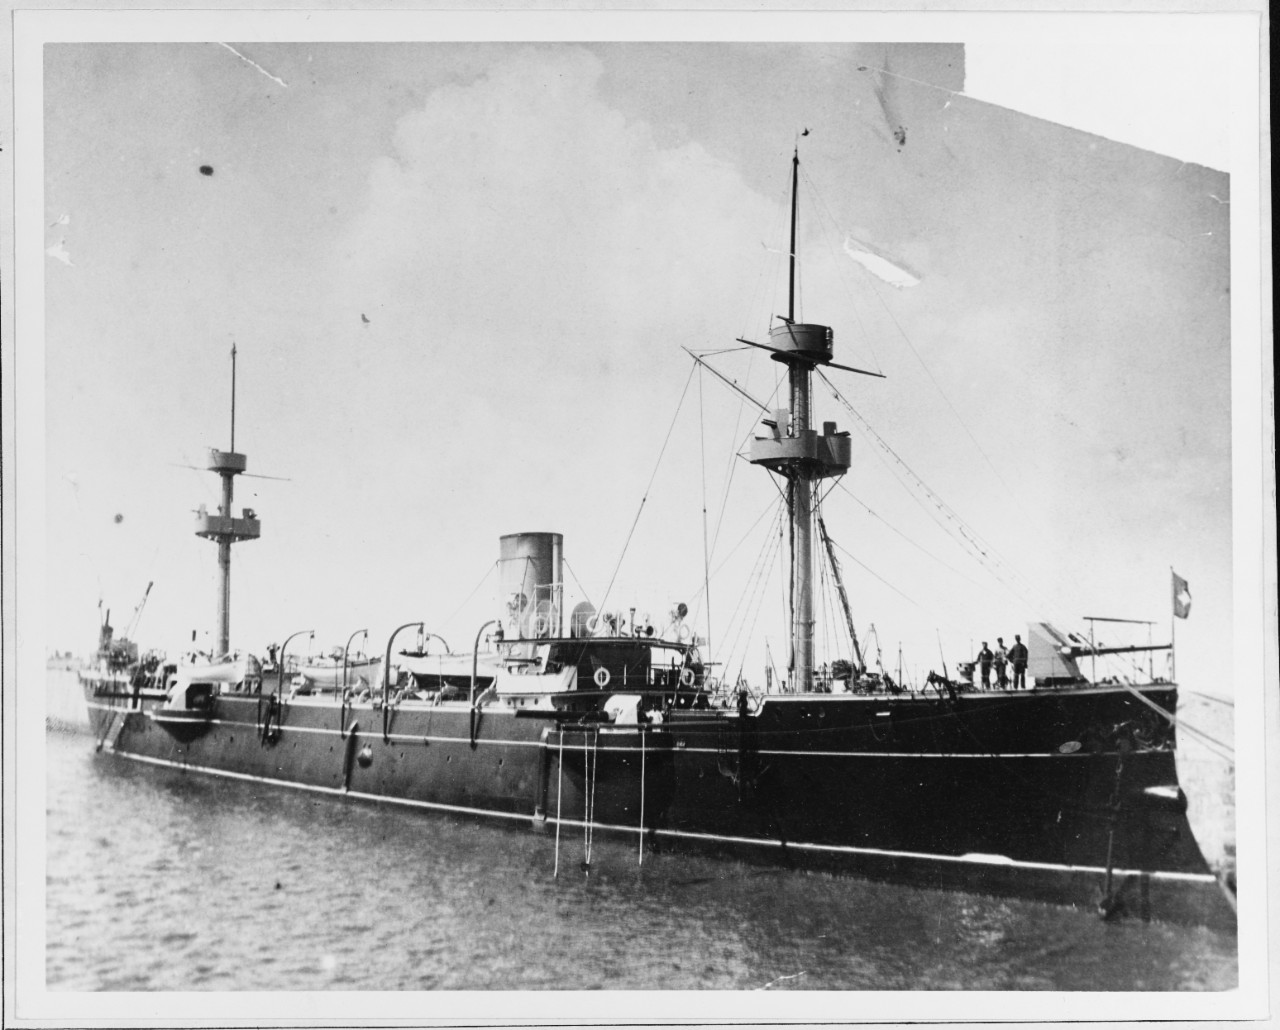 PRESIDENTE ERRAZURIZ (Chilean Cruiser, 1890)